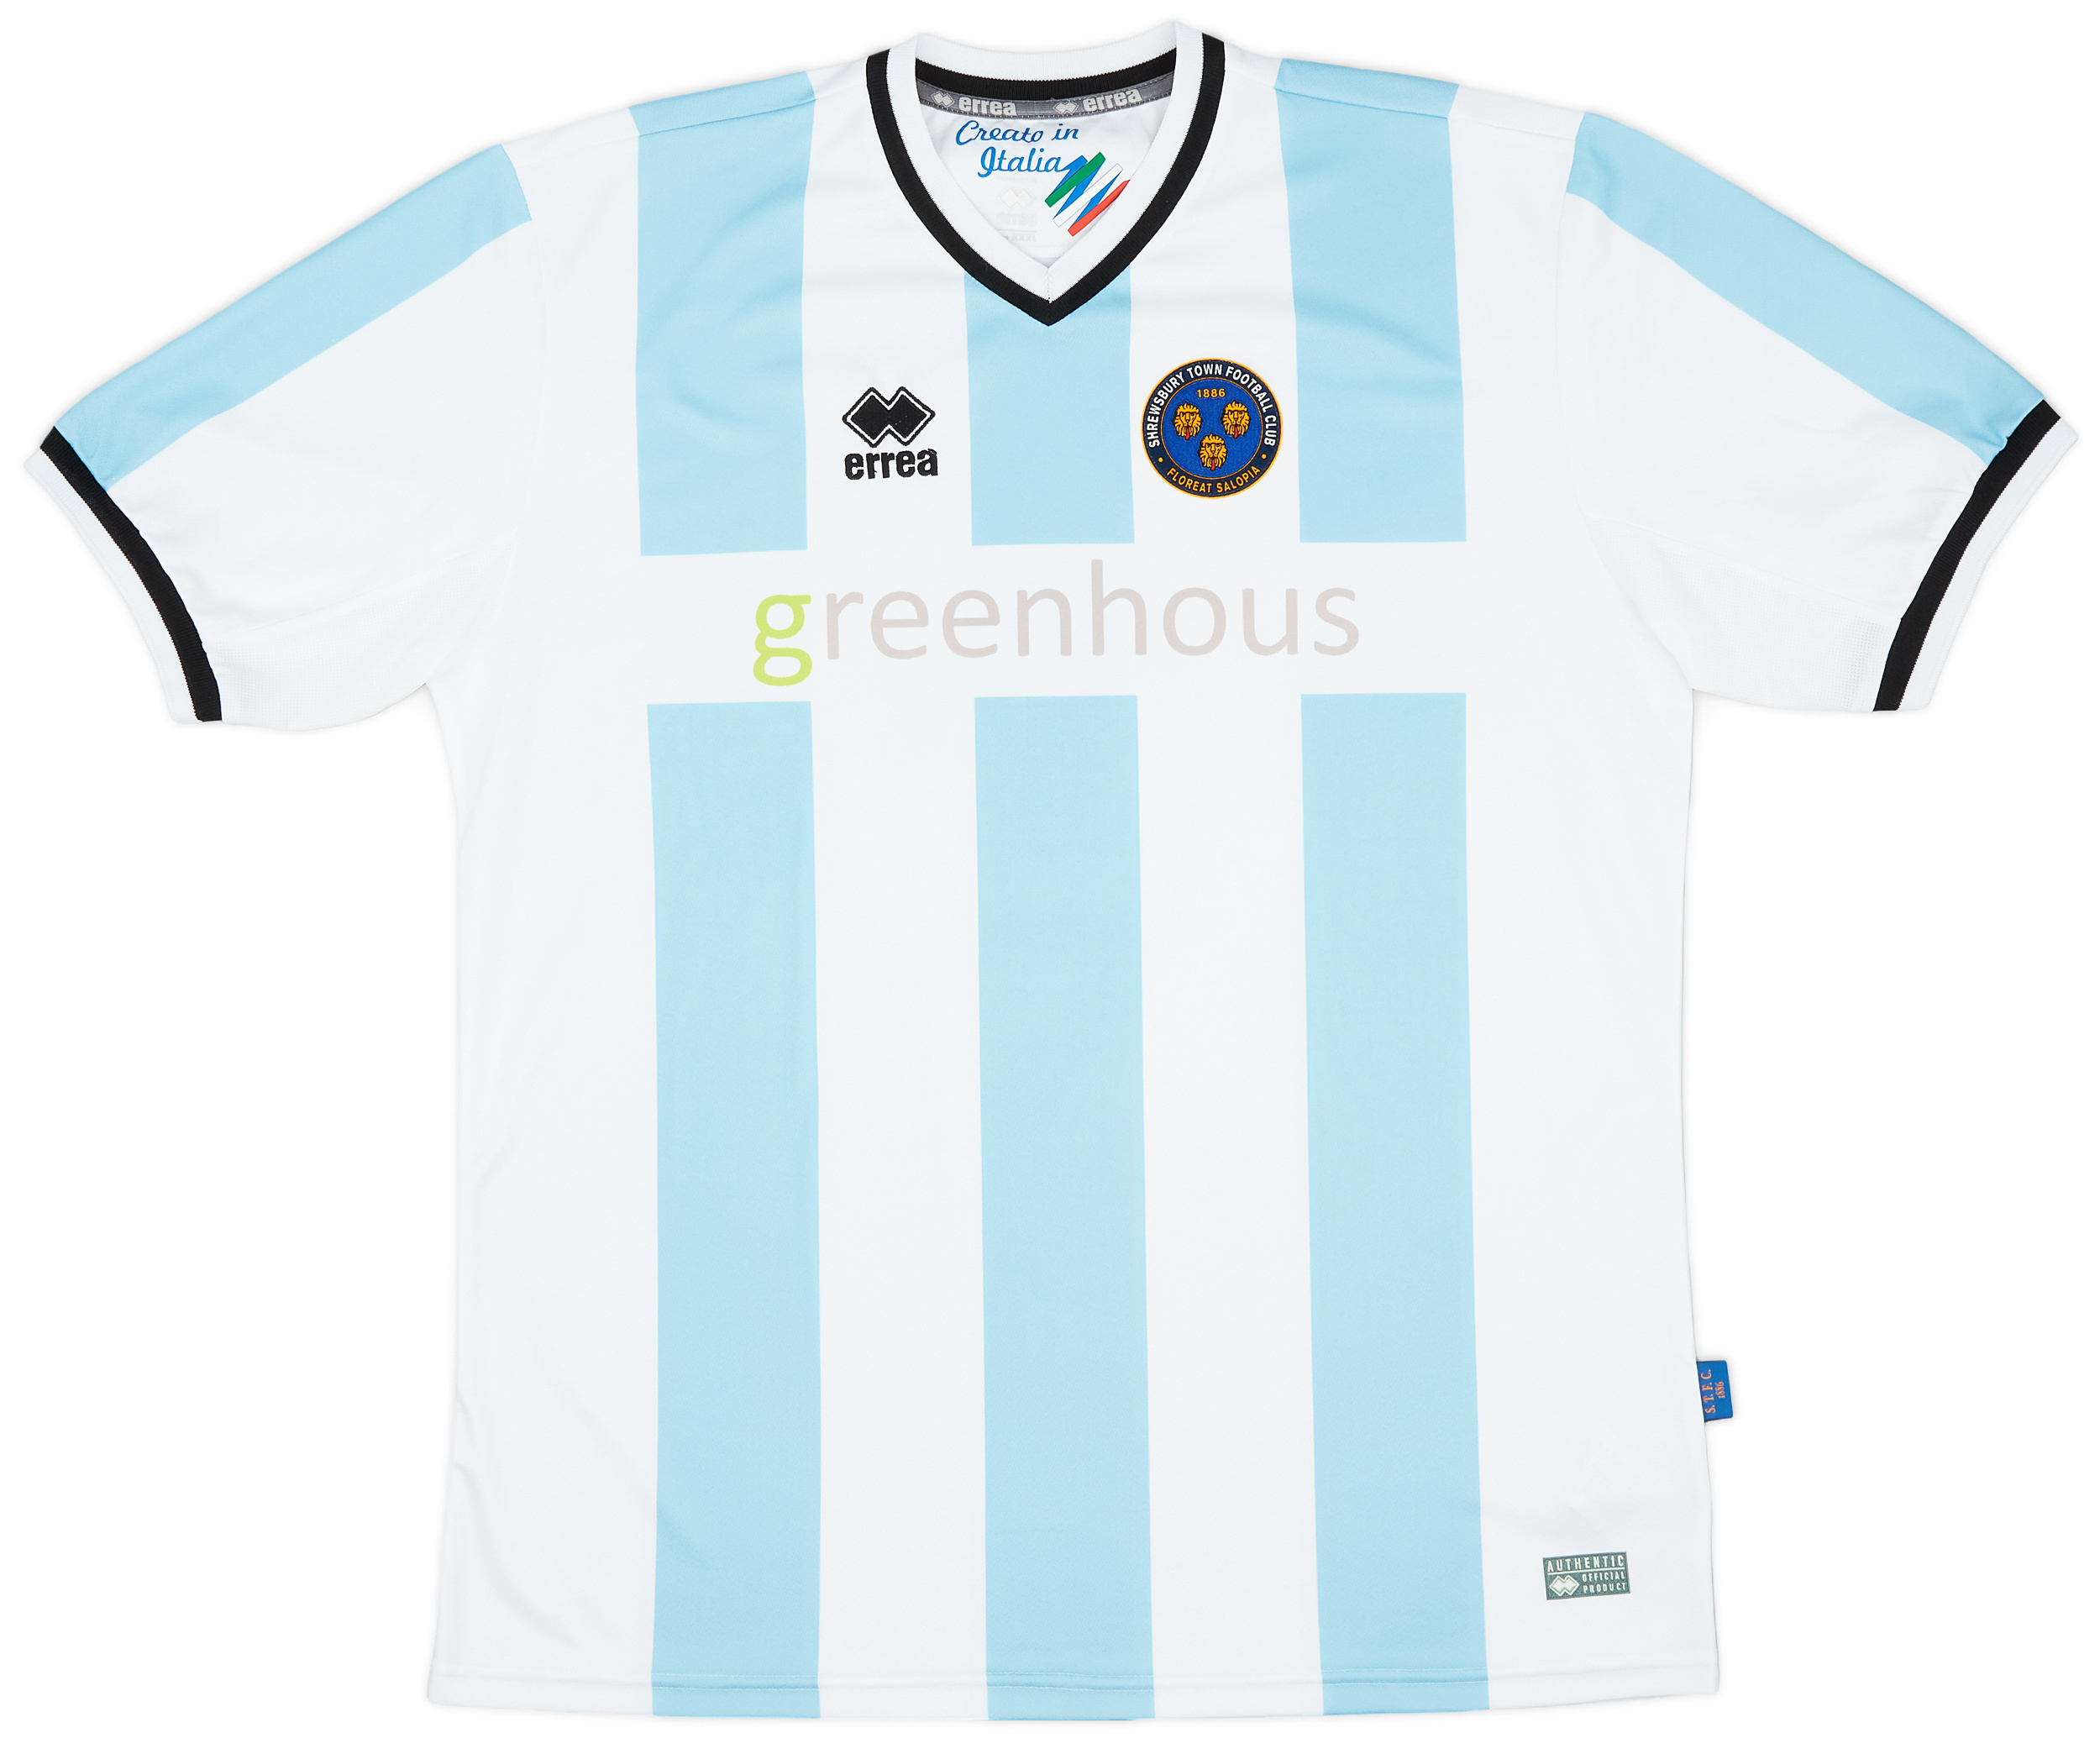 2015-16 Shrewsbury Town Away Shirt - 9/10 - ()